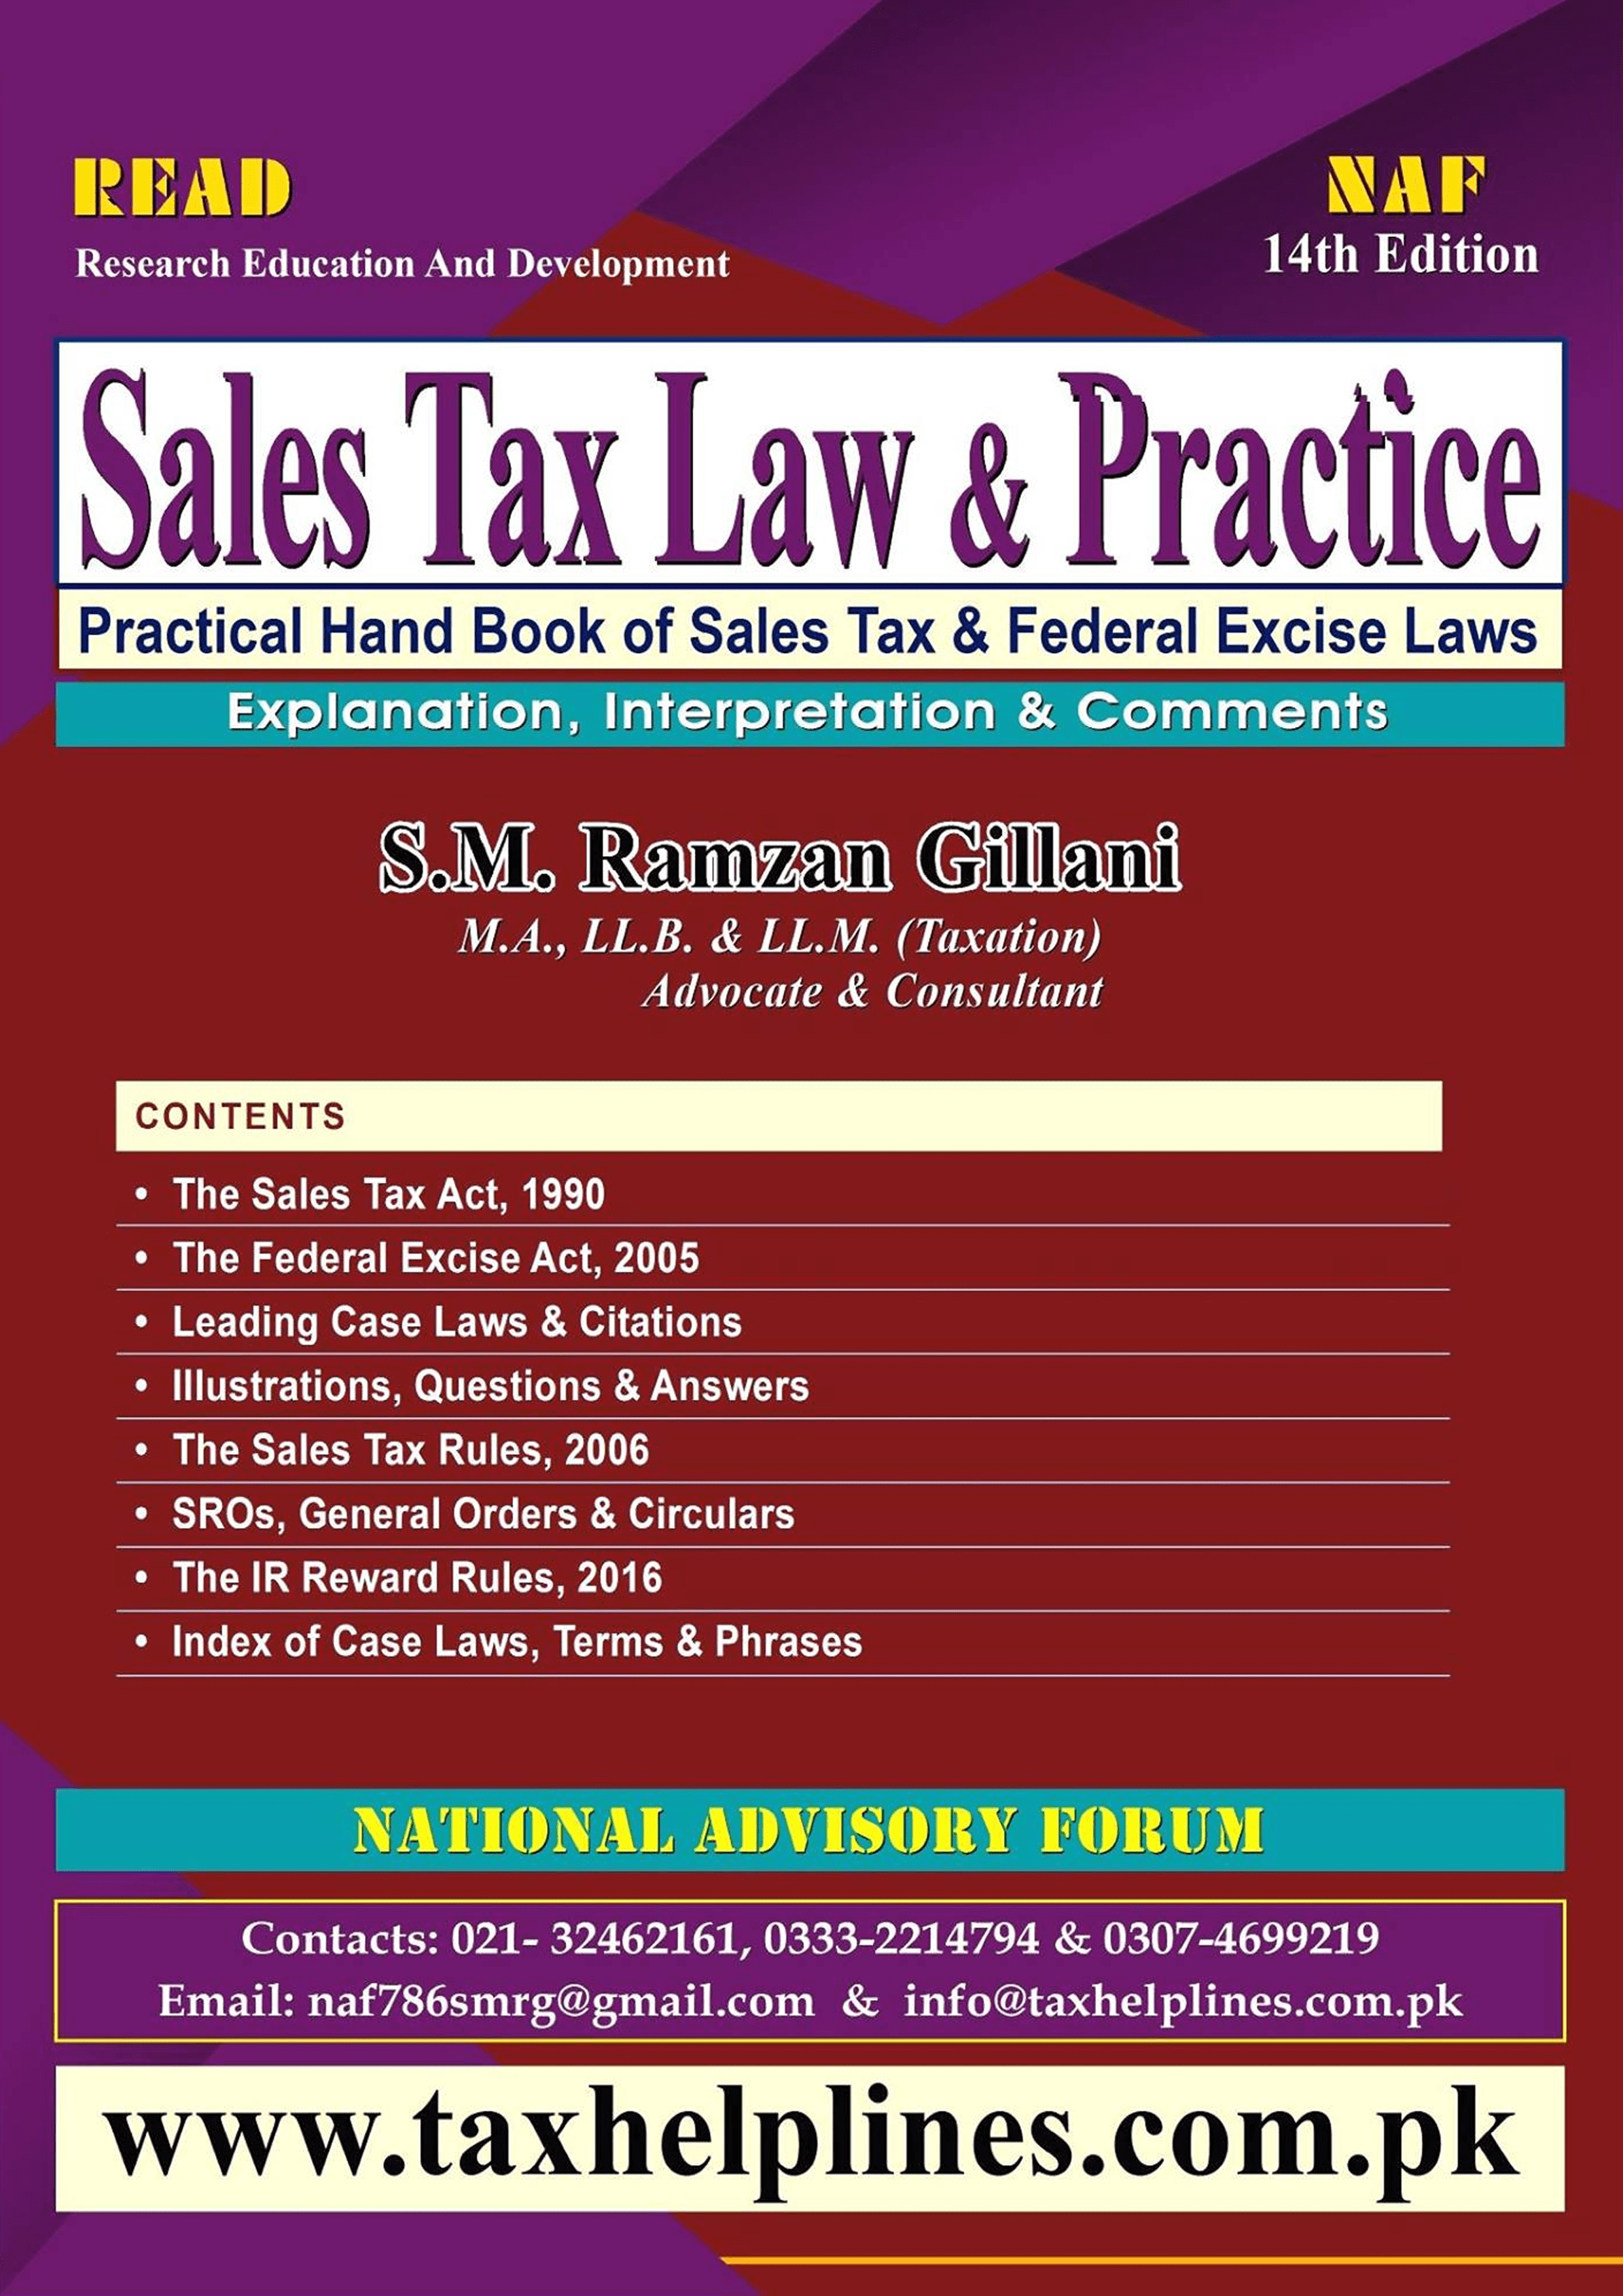 Sales Tax Law & Prcatice